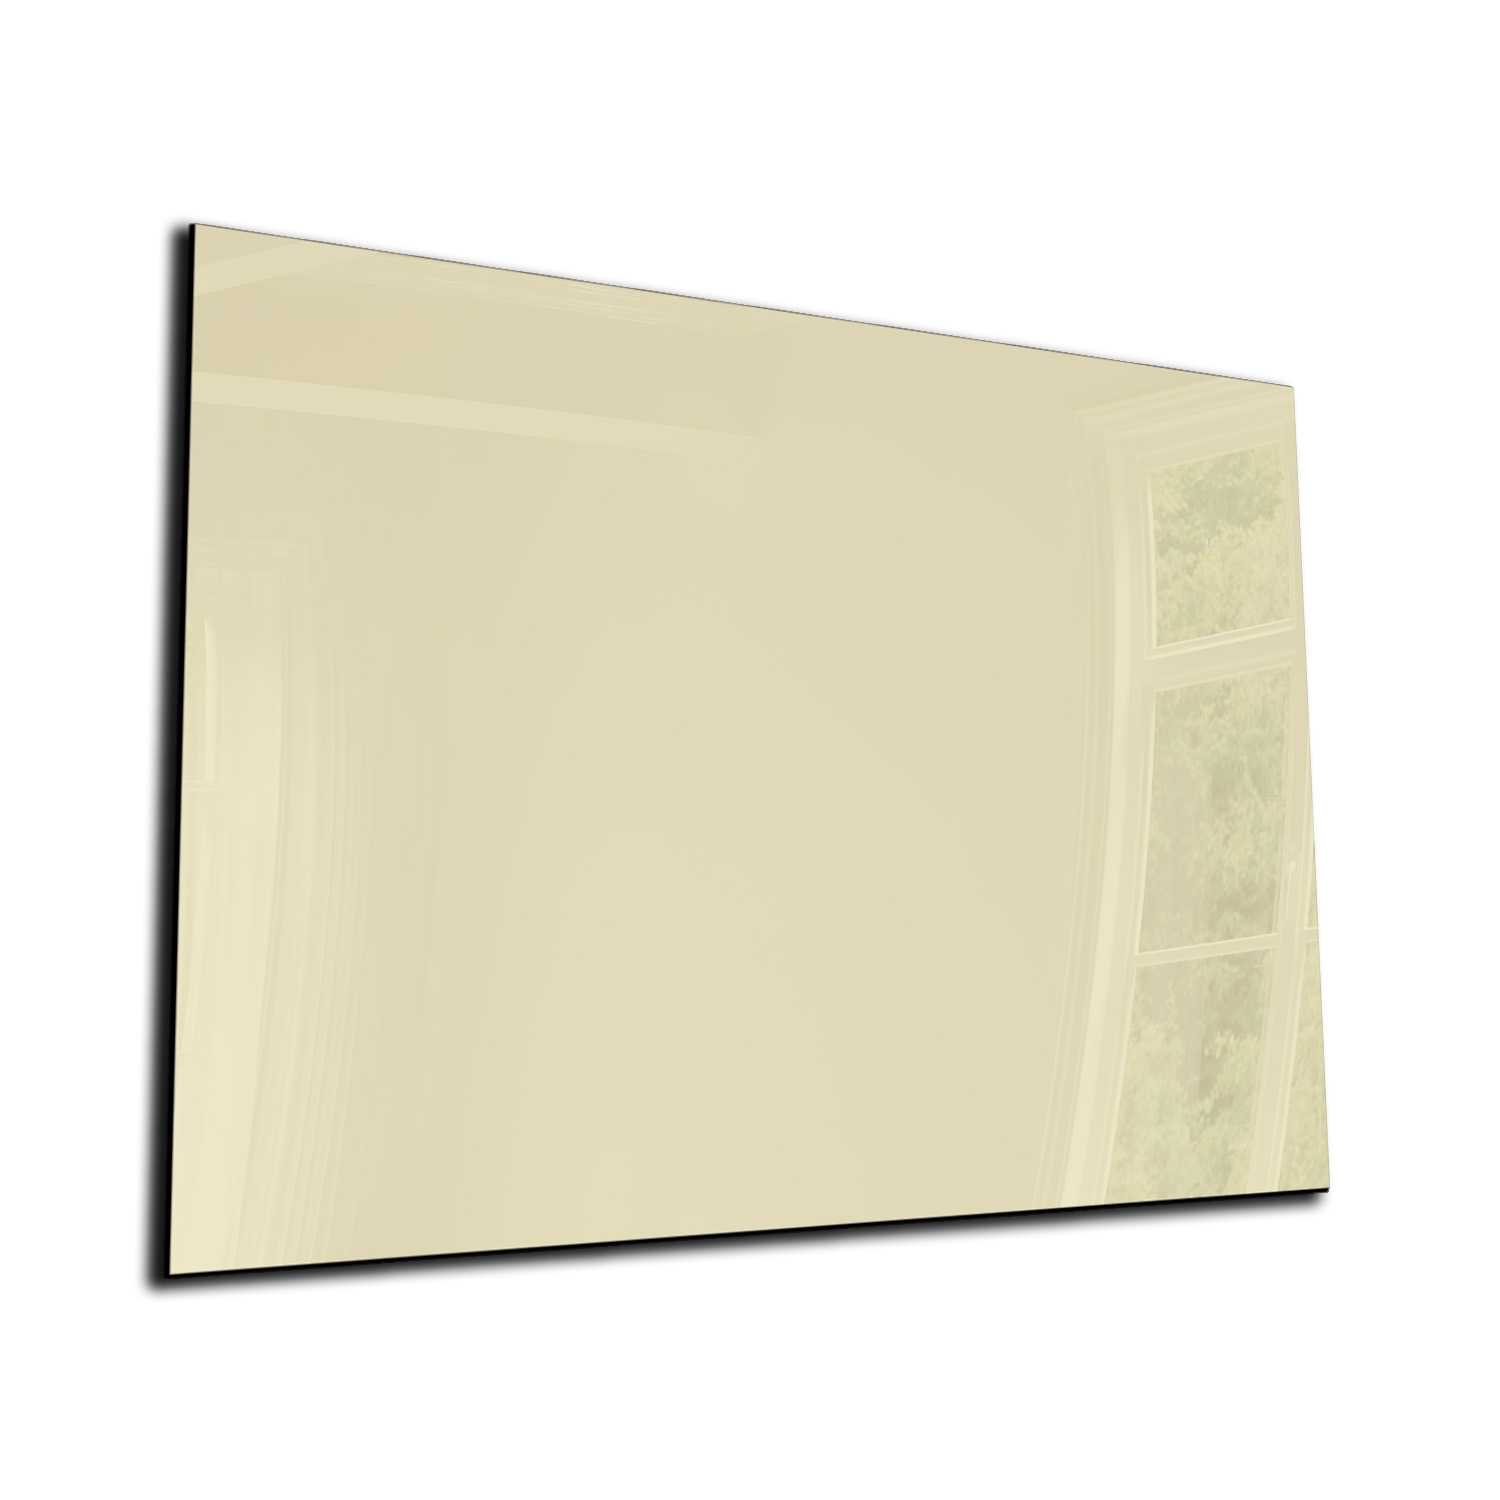 Ga naar beneden Mand gouden Magneetbord - Glas - Whiteboard - Memobord - Magnetisch - Diverse maten -  Kleur beige - Designglas